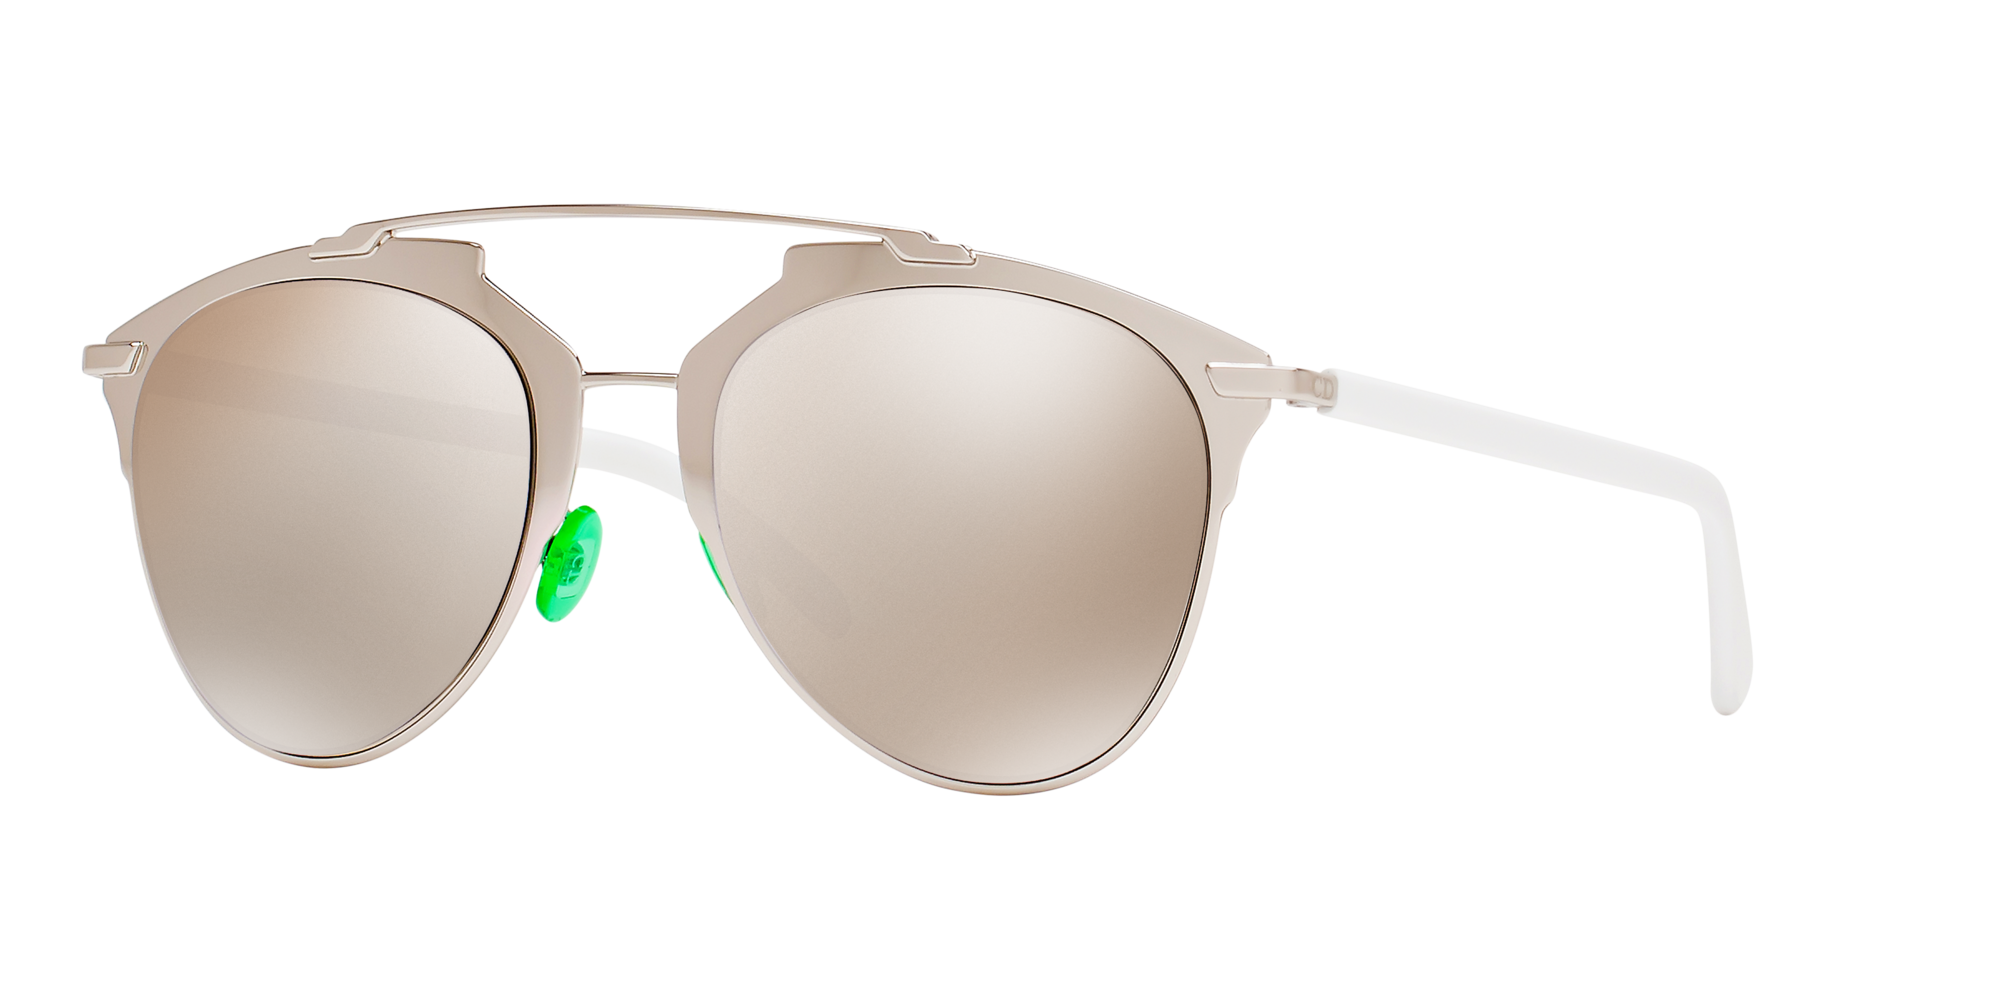 dior reflected aviator sunglasses